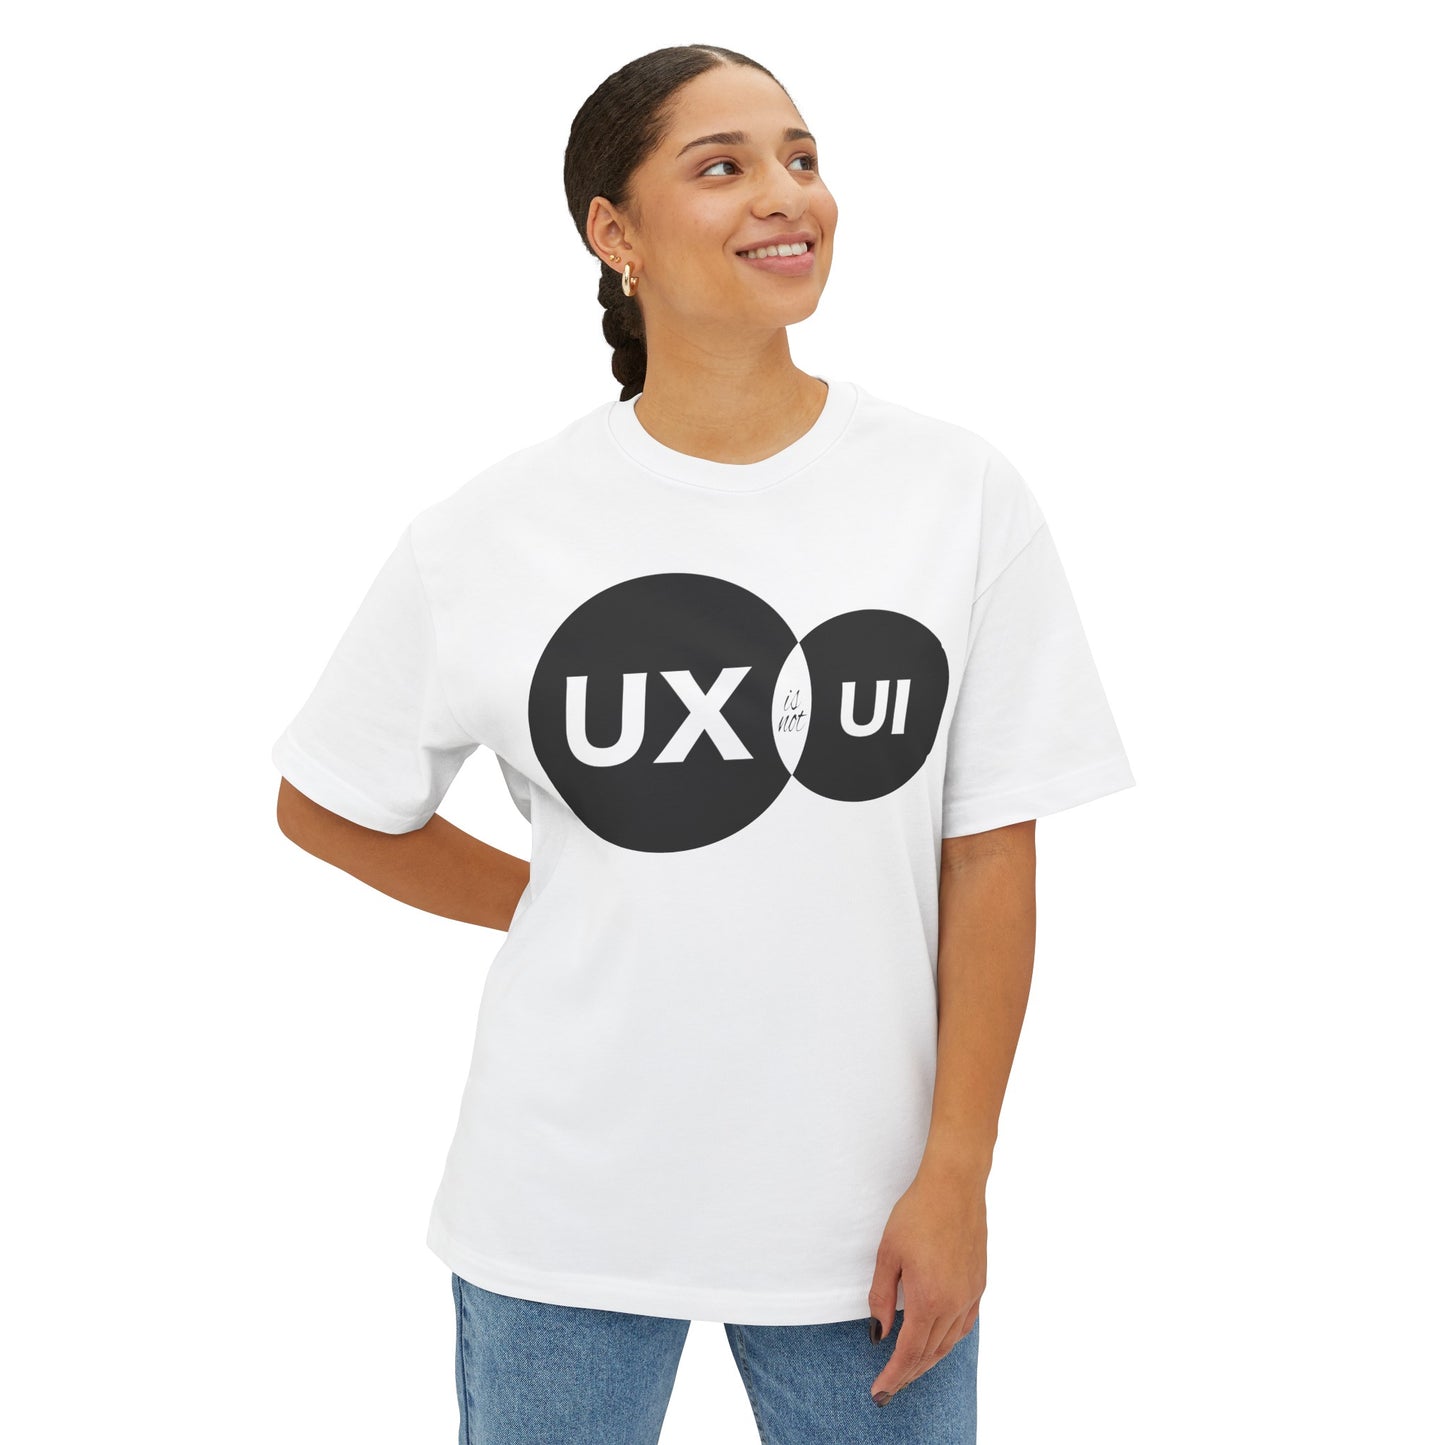 UX is not UI Venn Unisex Oversized Boxy Tee